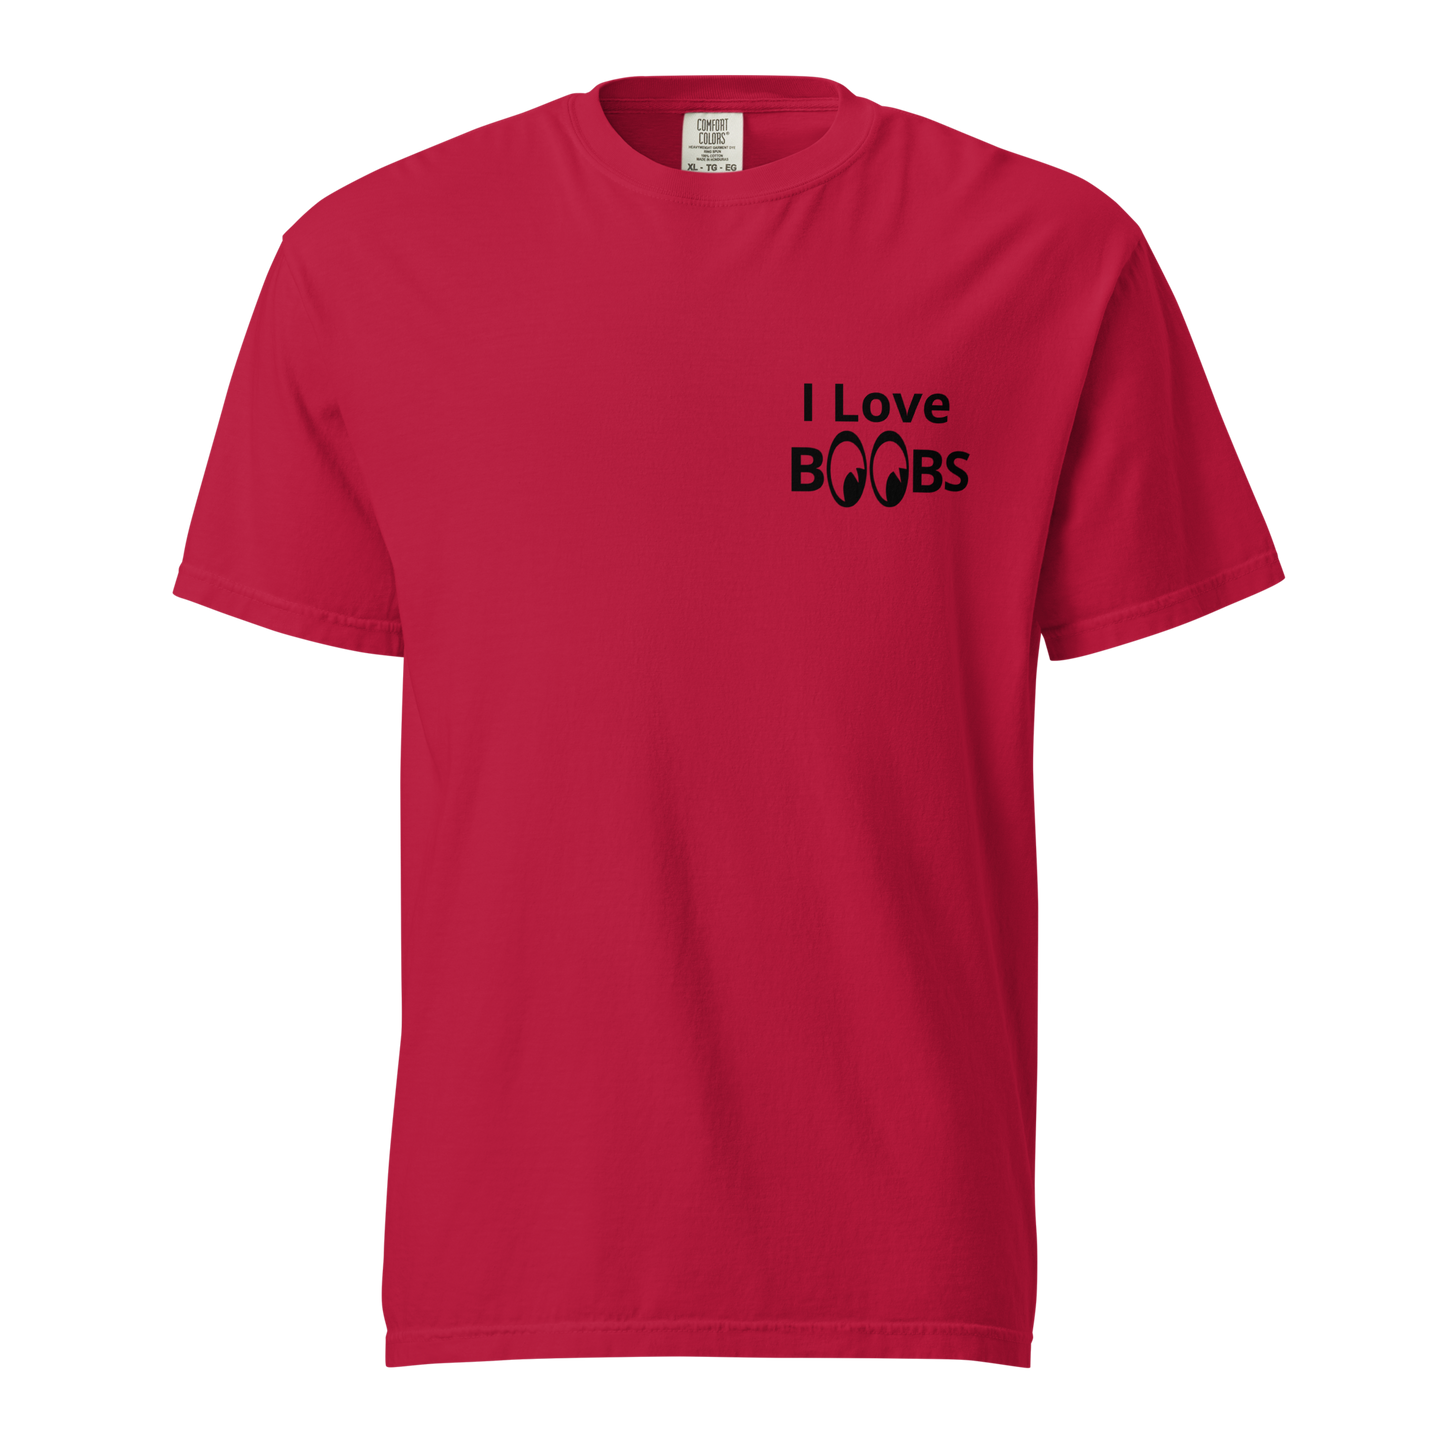 I Love B00BS T-Shirt